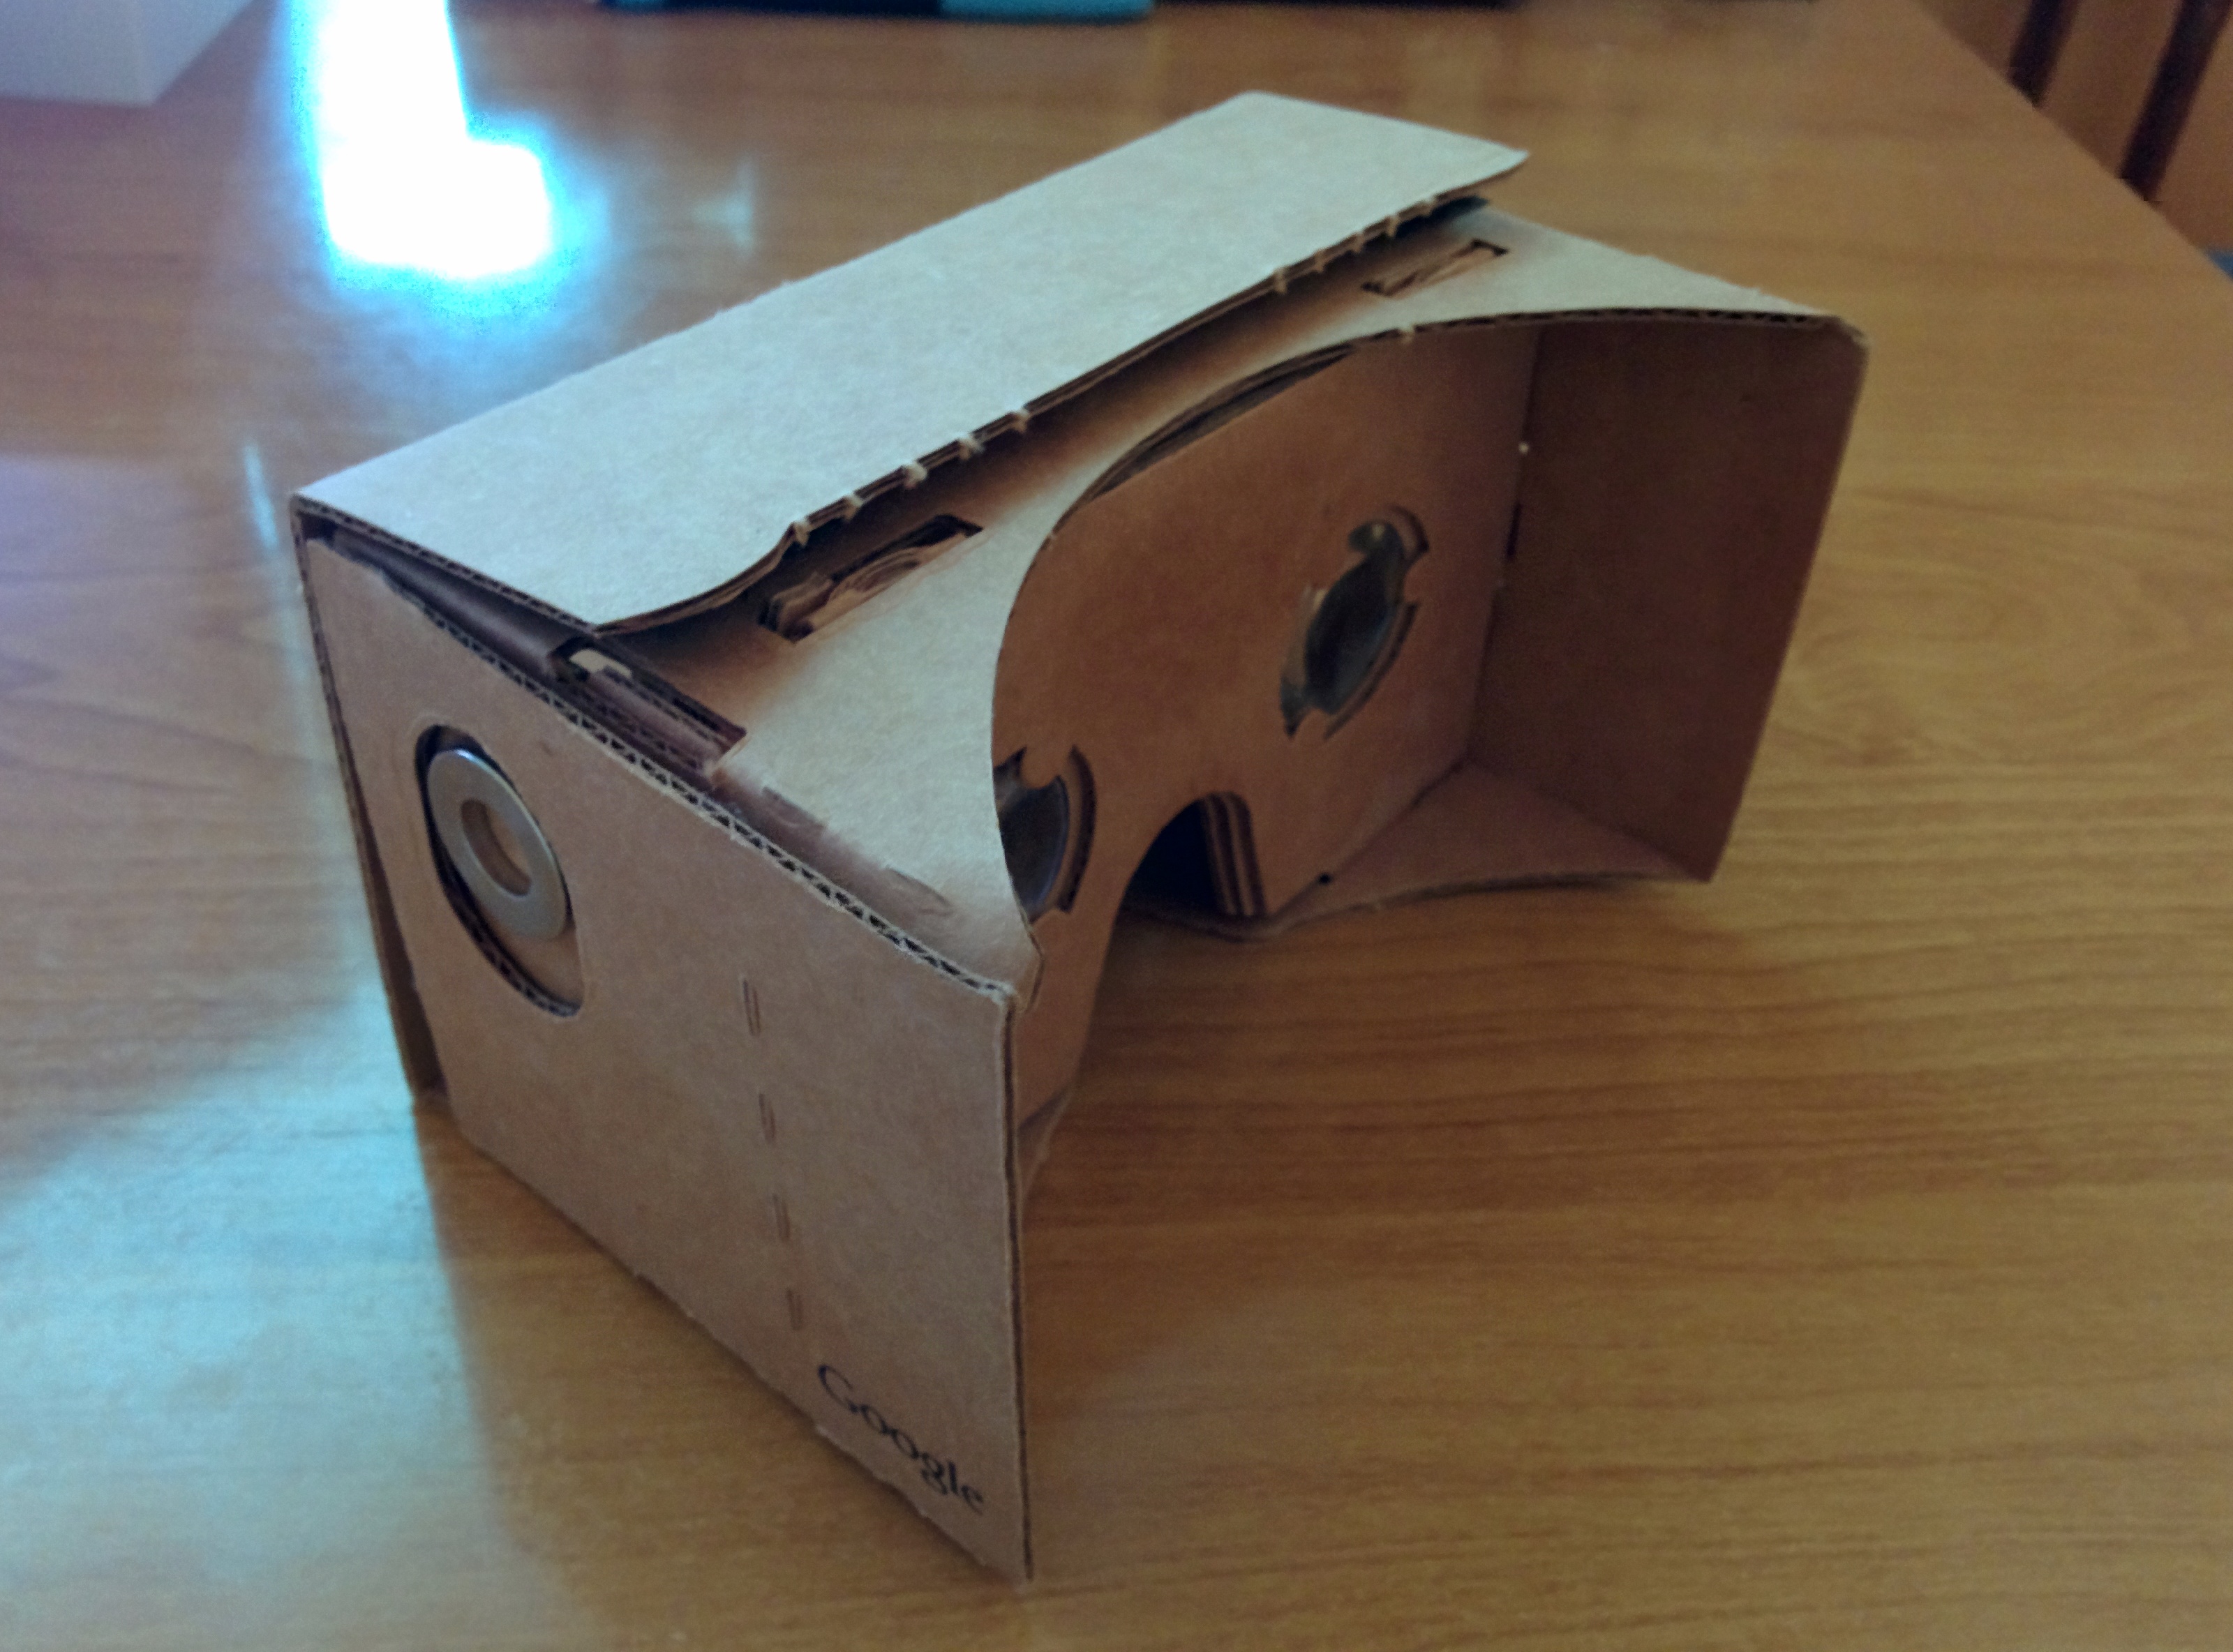 My Google Cardboard